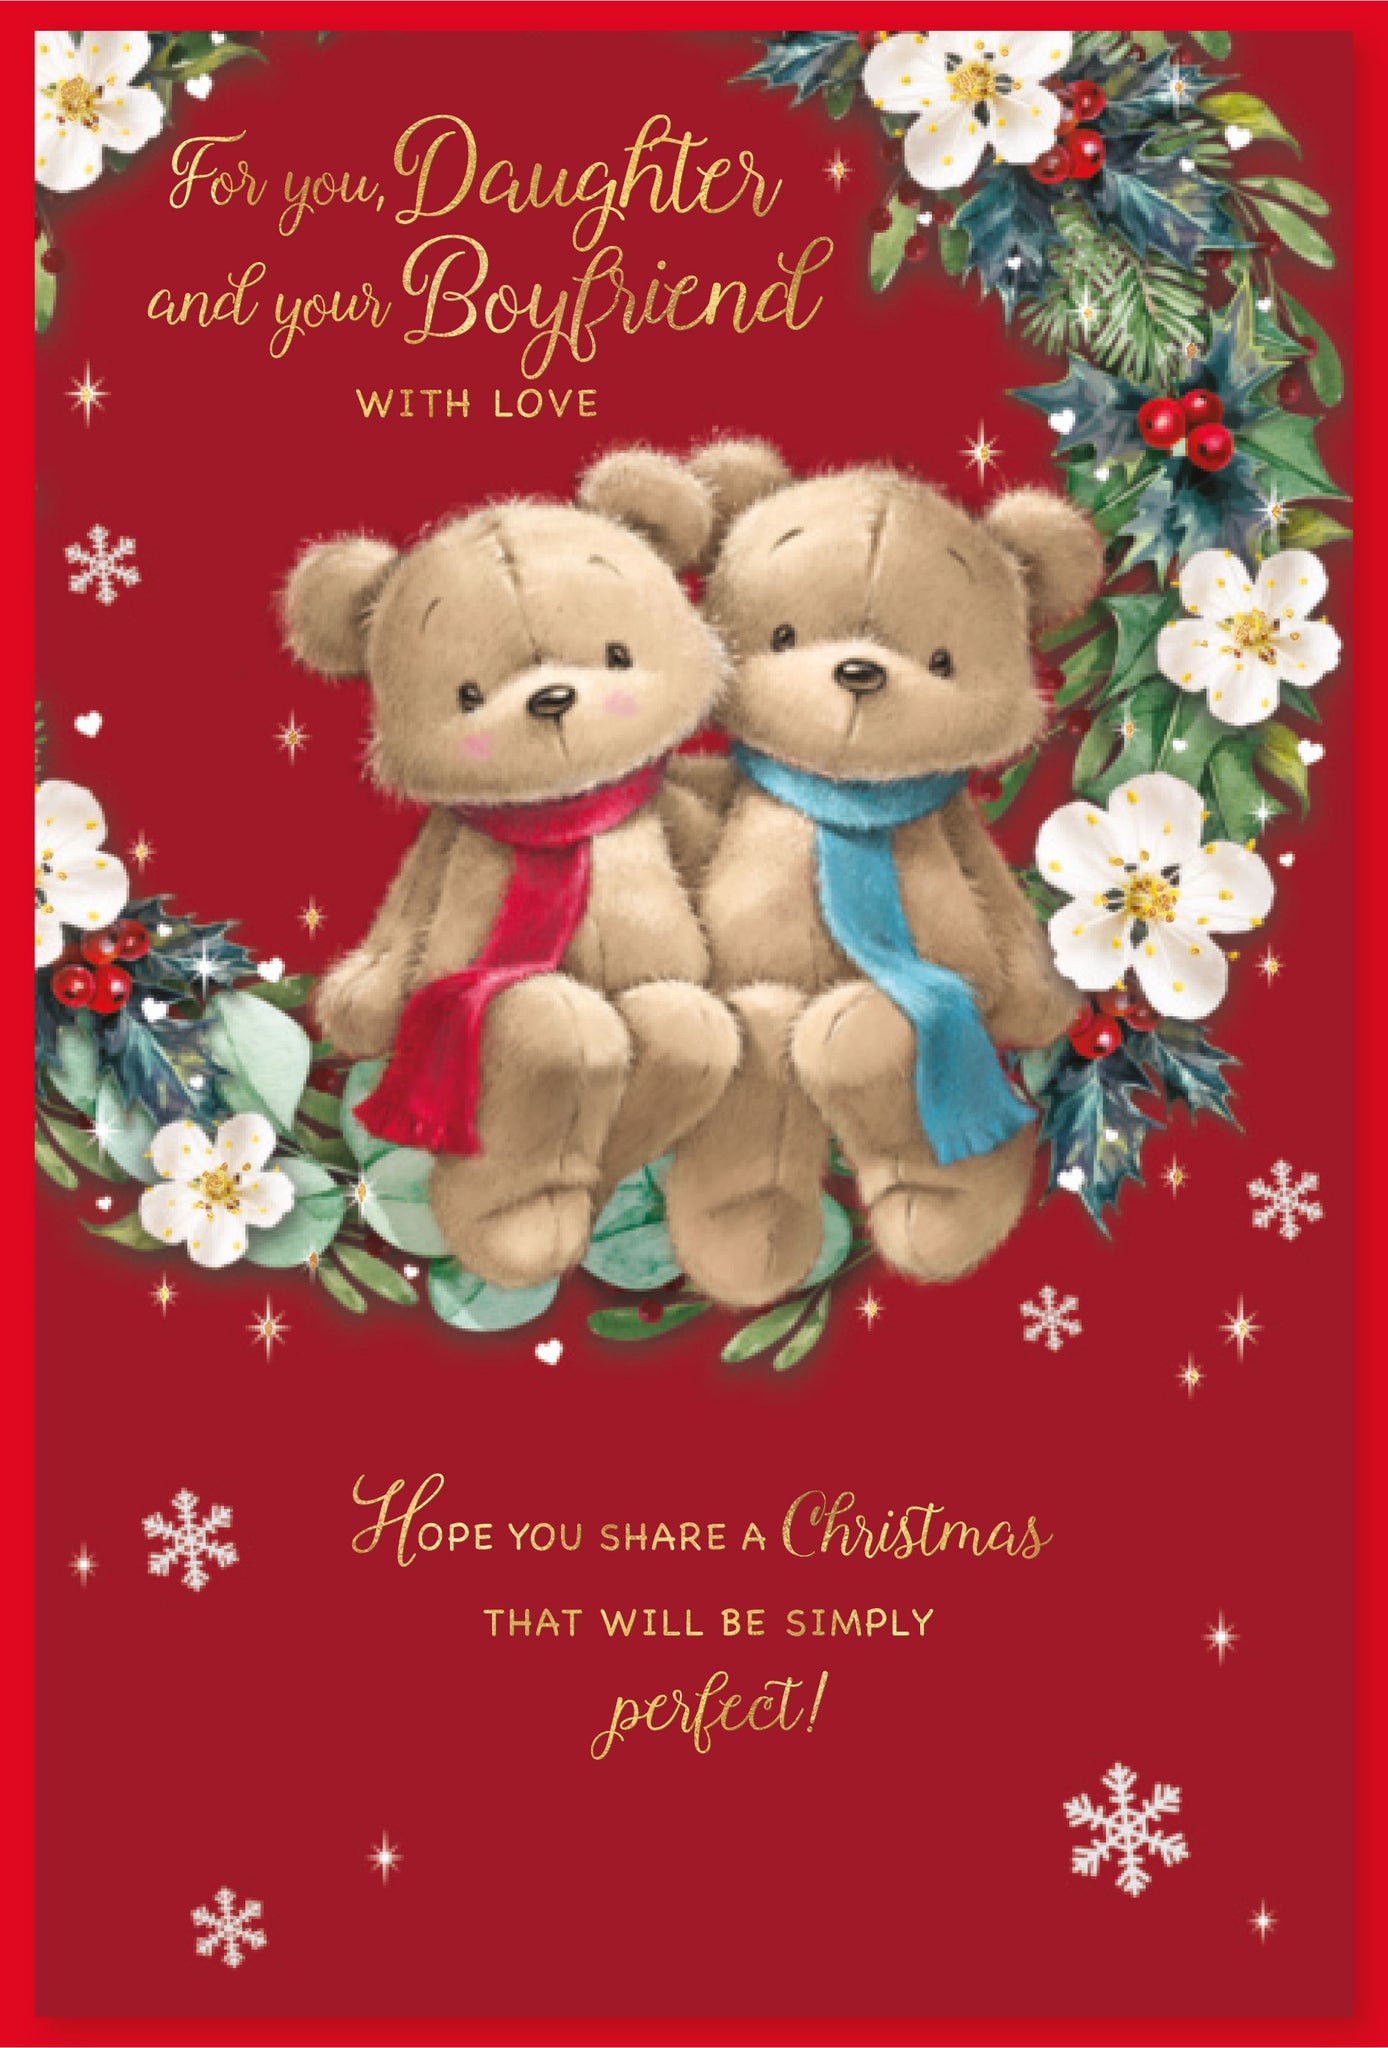 Daughter and boyfriend Christmas card - cute bears